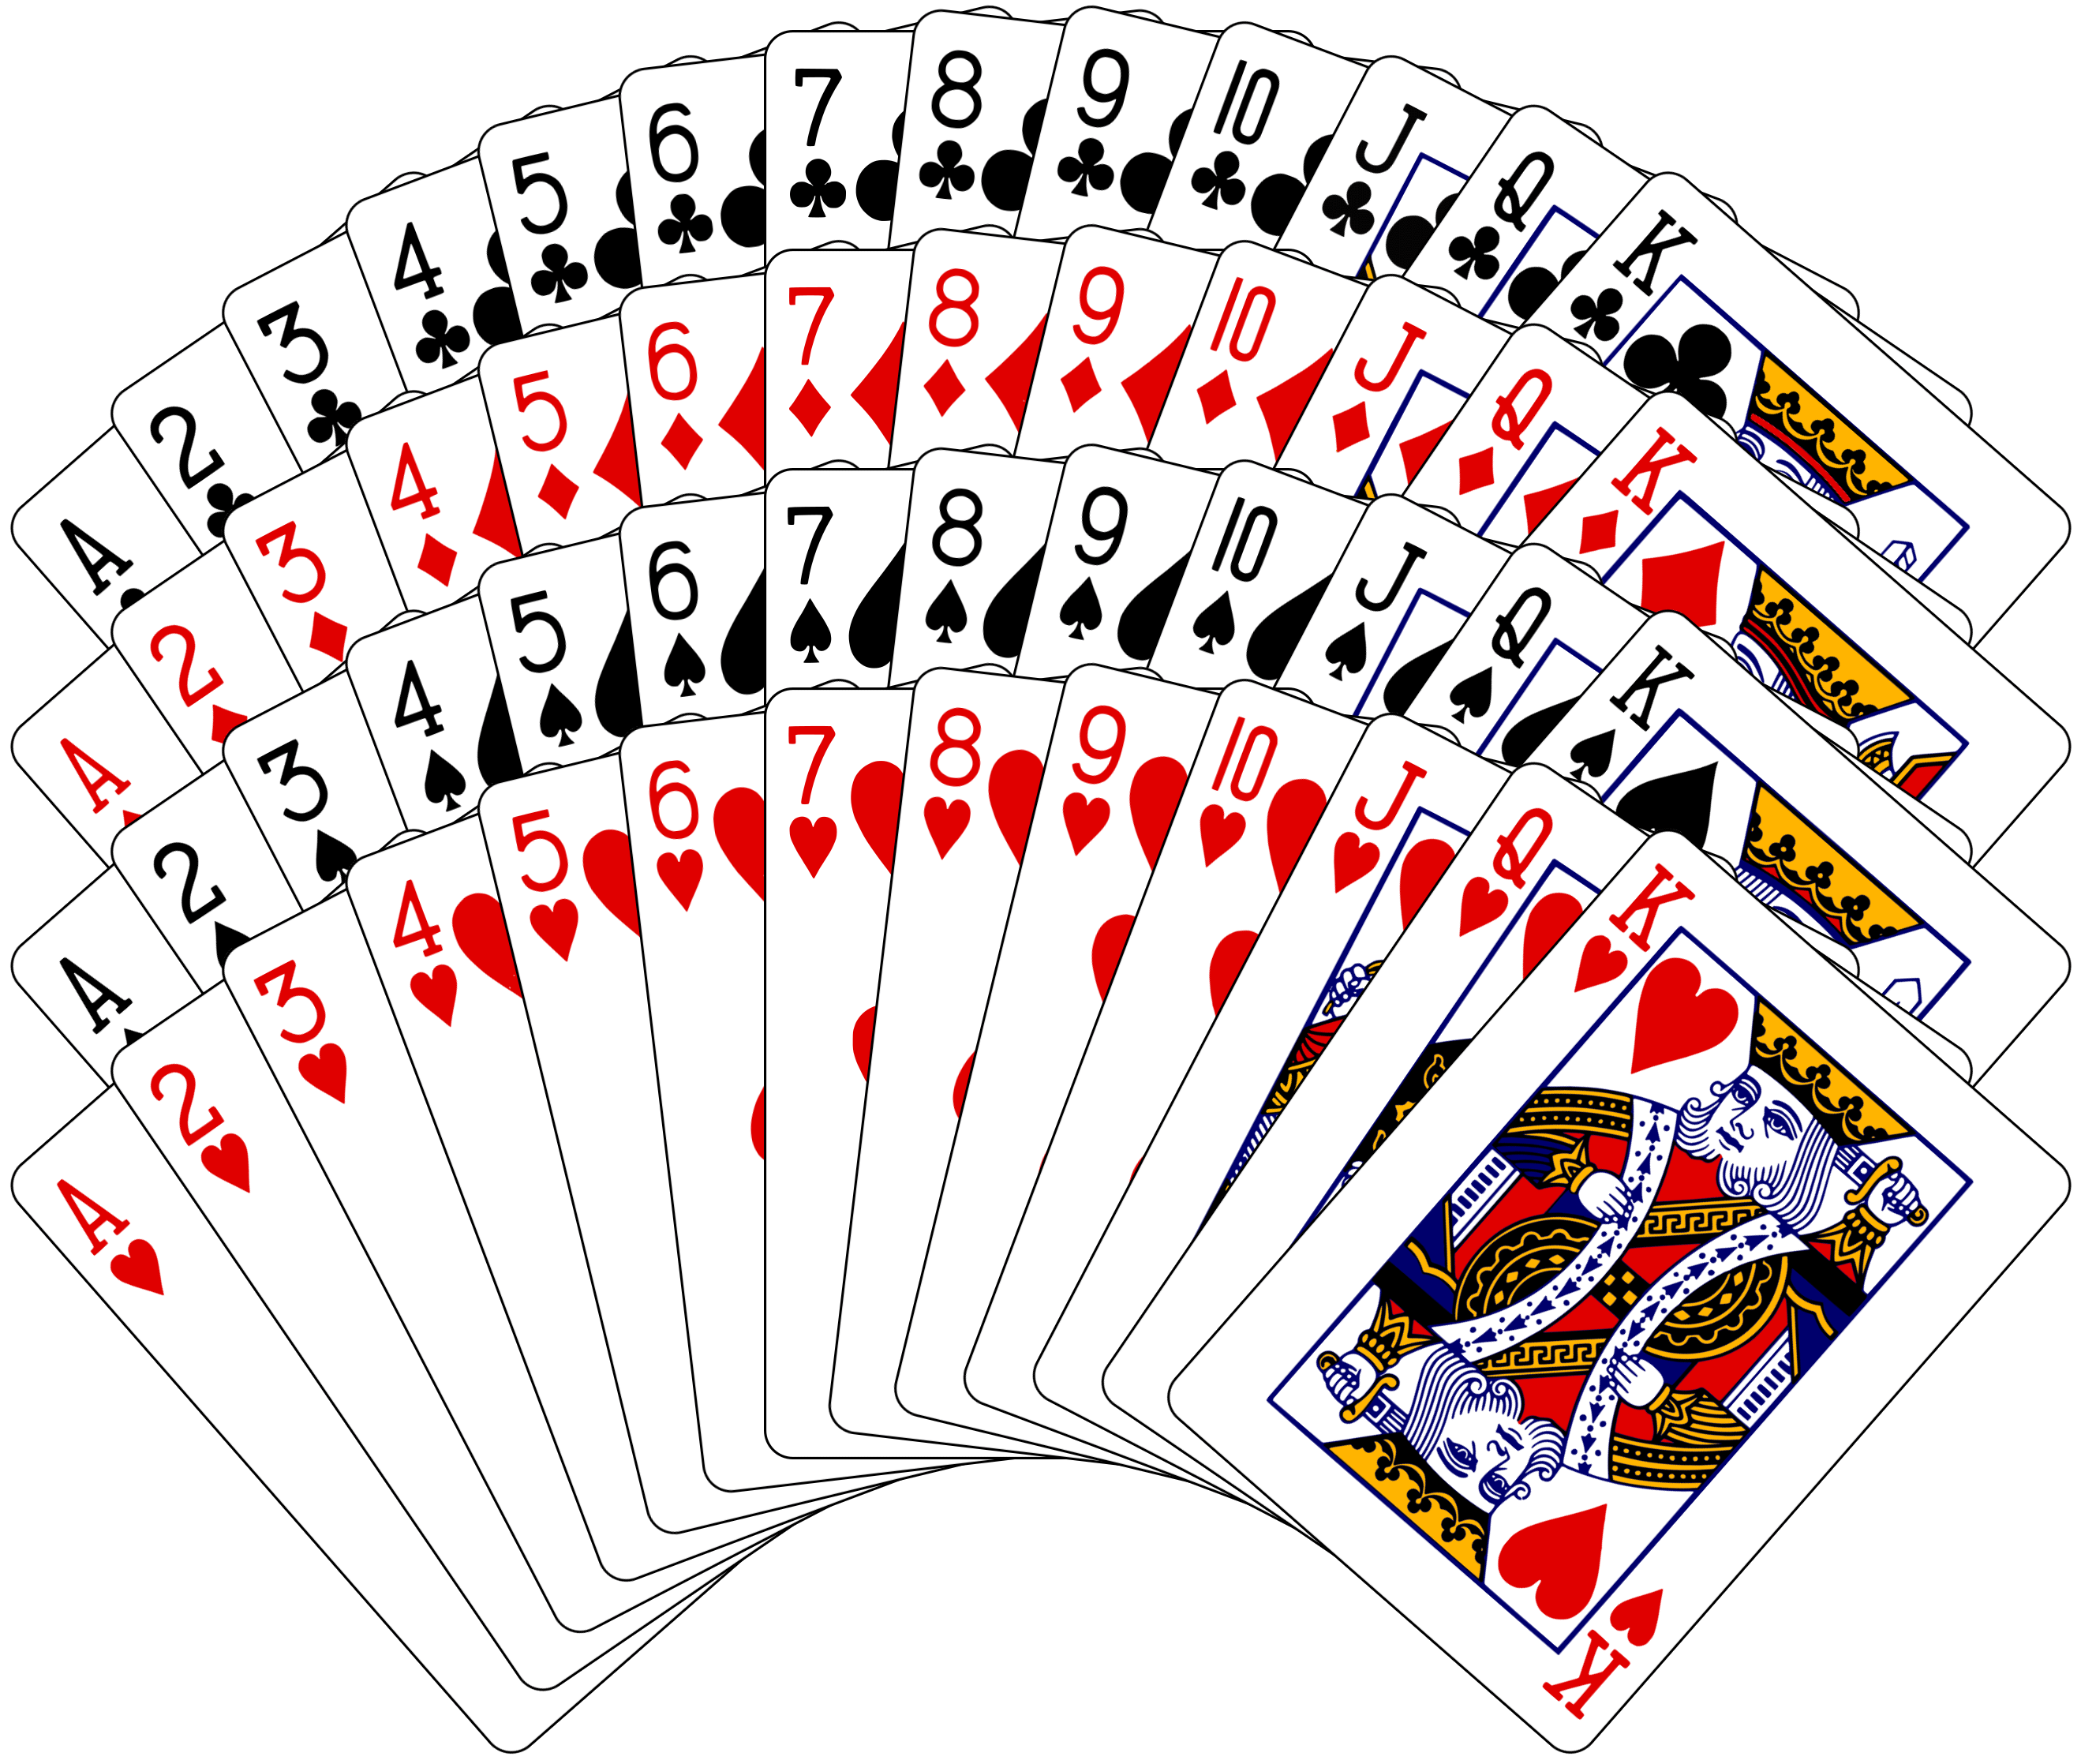 a full deck